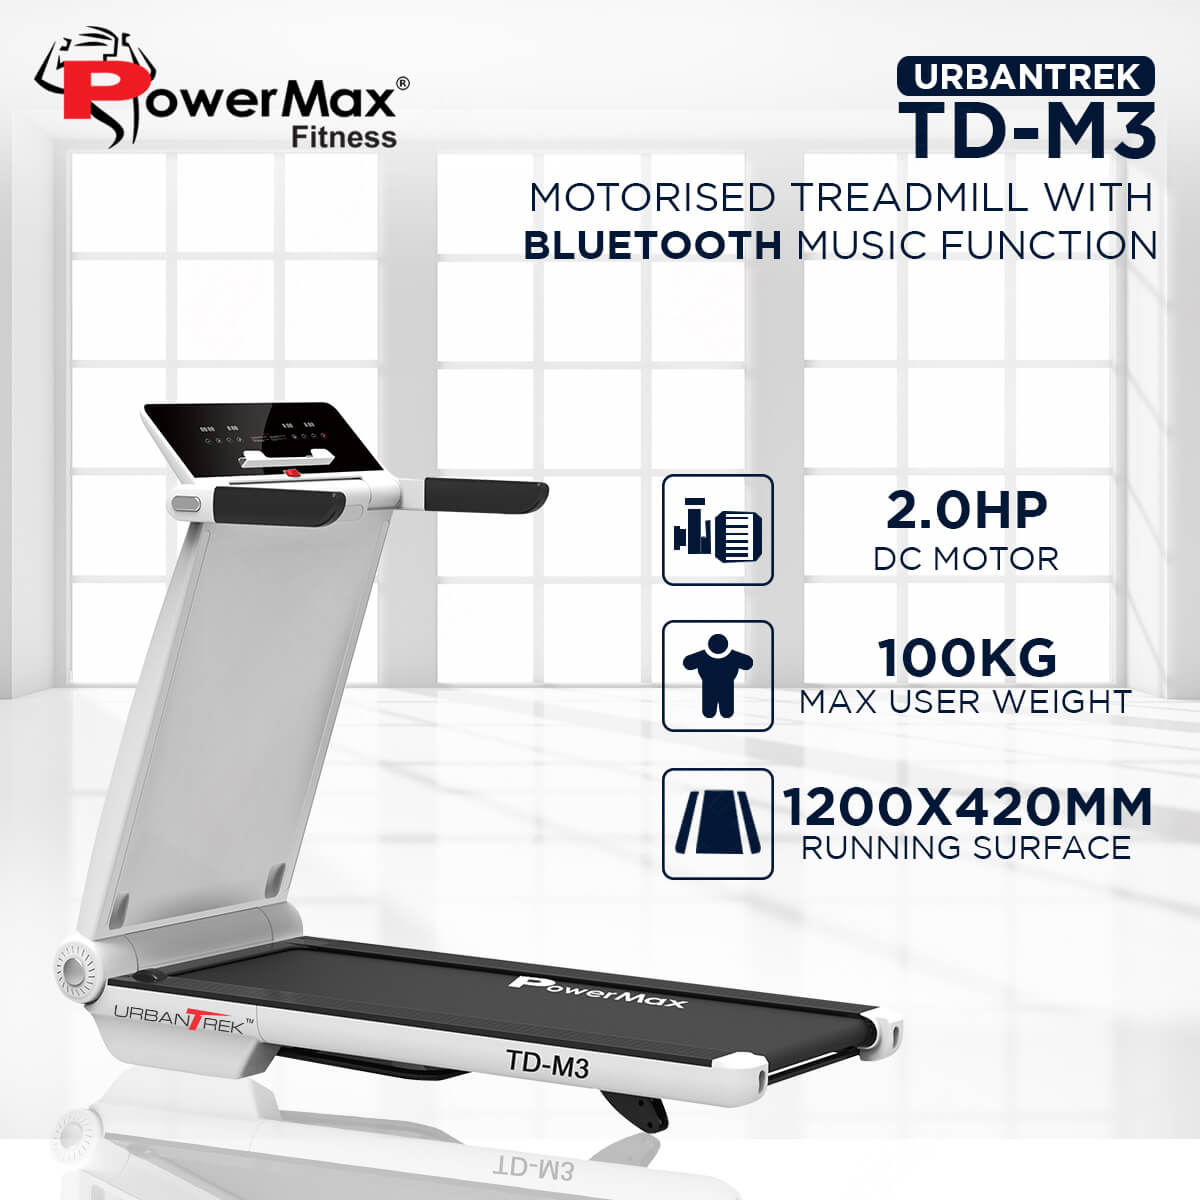 UrbanTrek TD-M3  Motorised Treadmill with Bluetooth Music Function